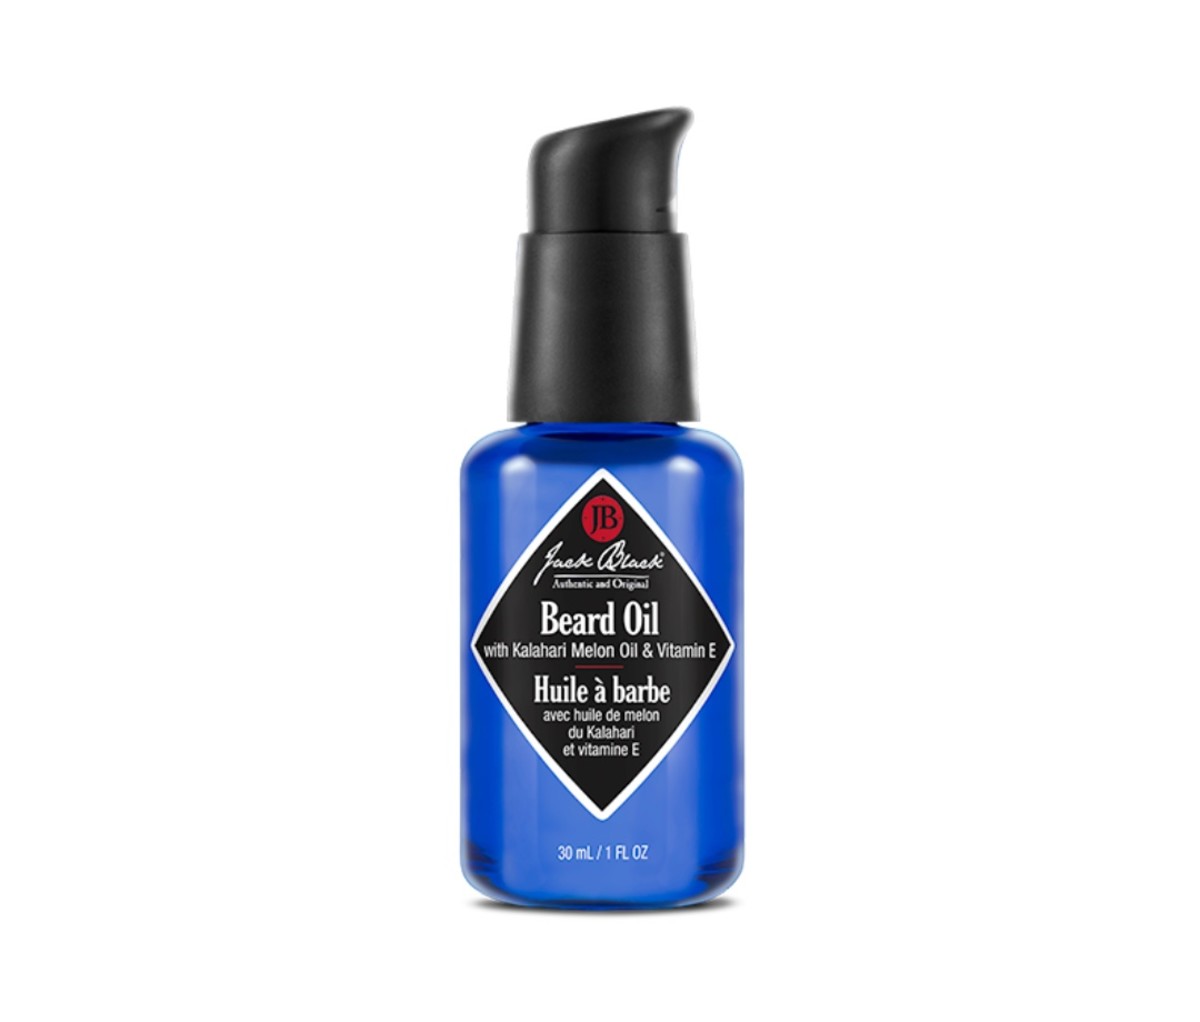 Blue bottle of beard oil with a black diamond-shaped label.